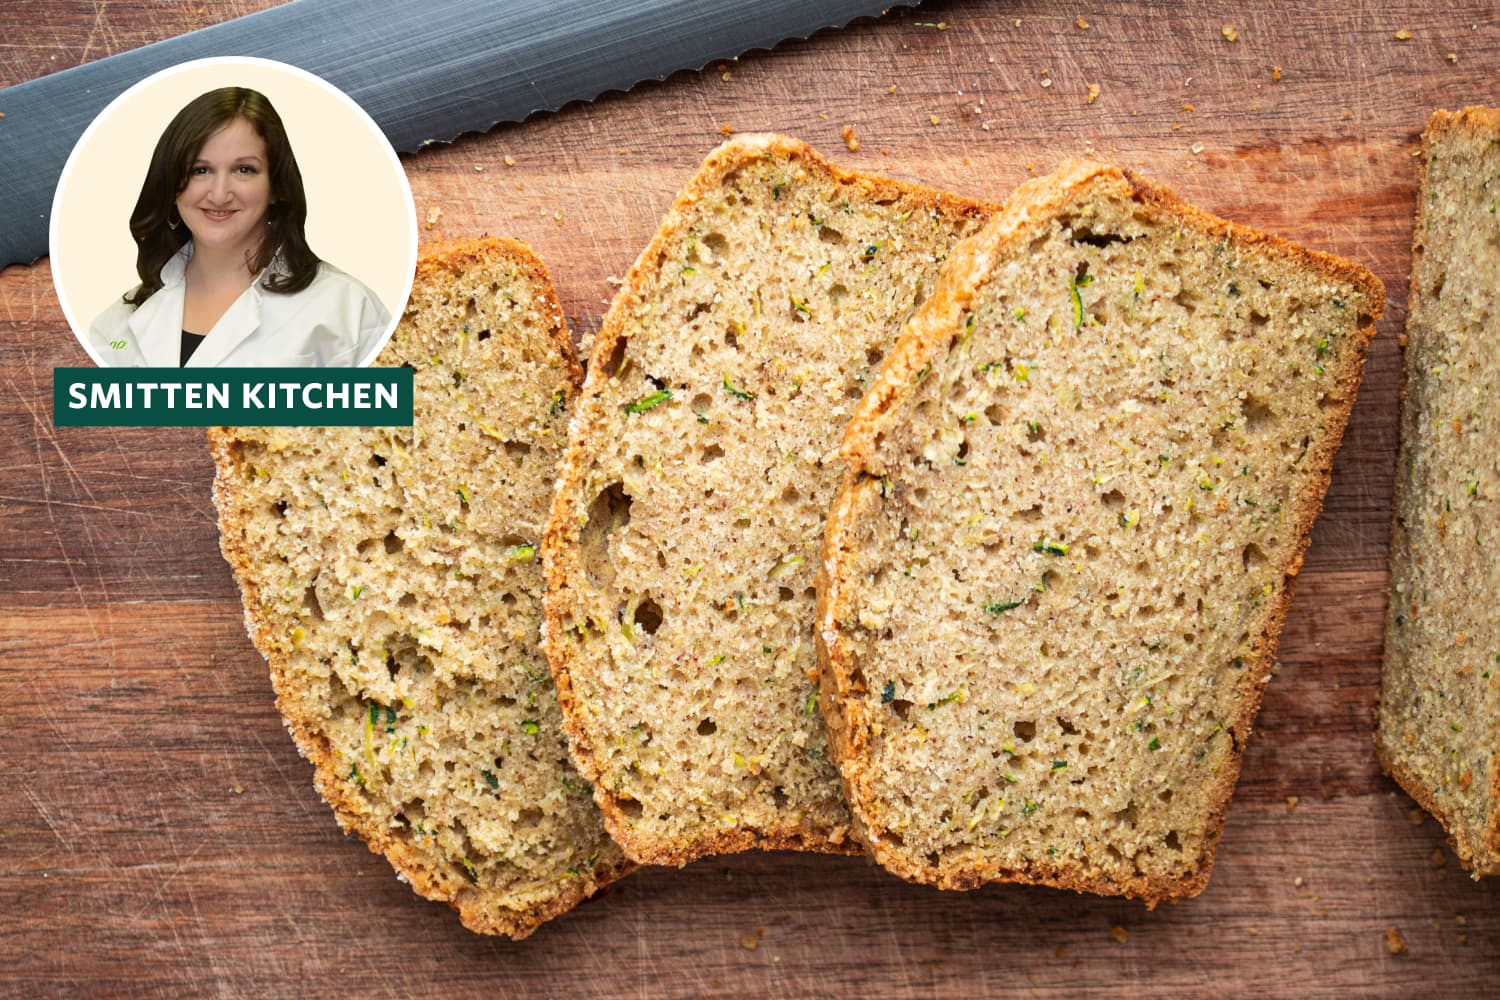 The One Ingredient That Makes Smitten Kitchen’s Zucchini Bread So Good